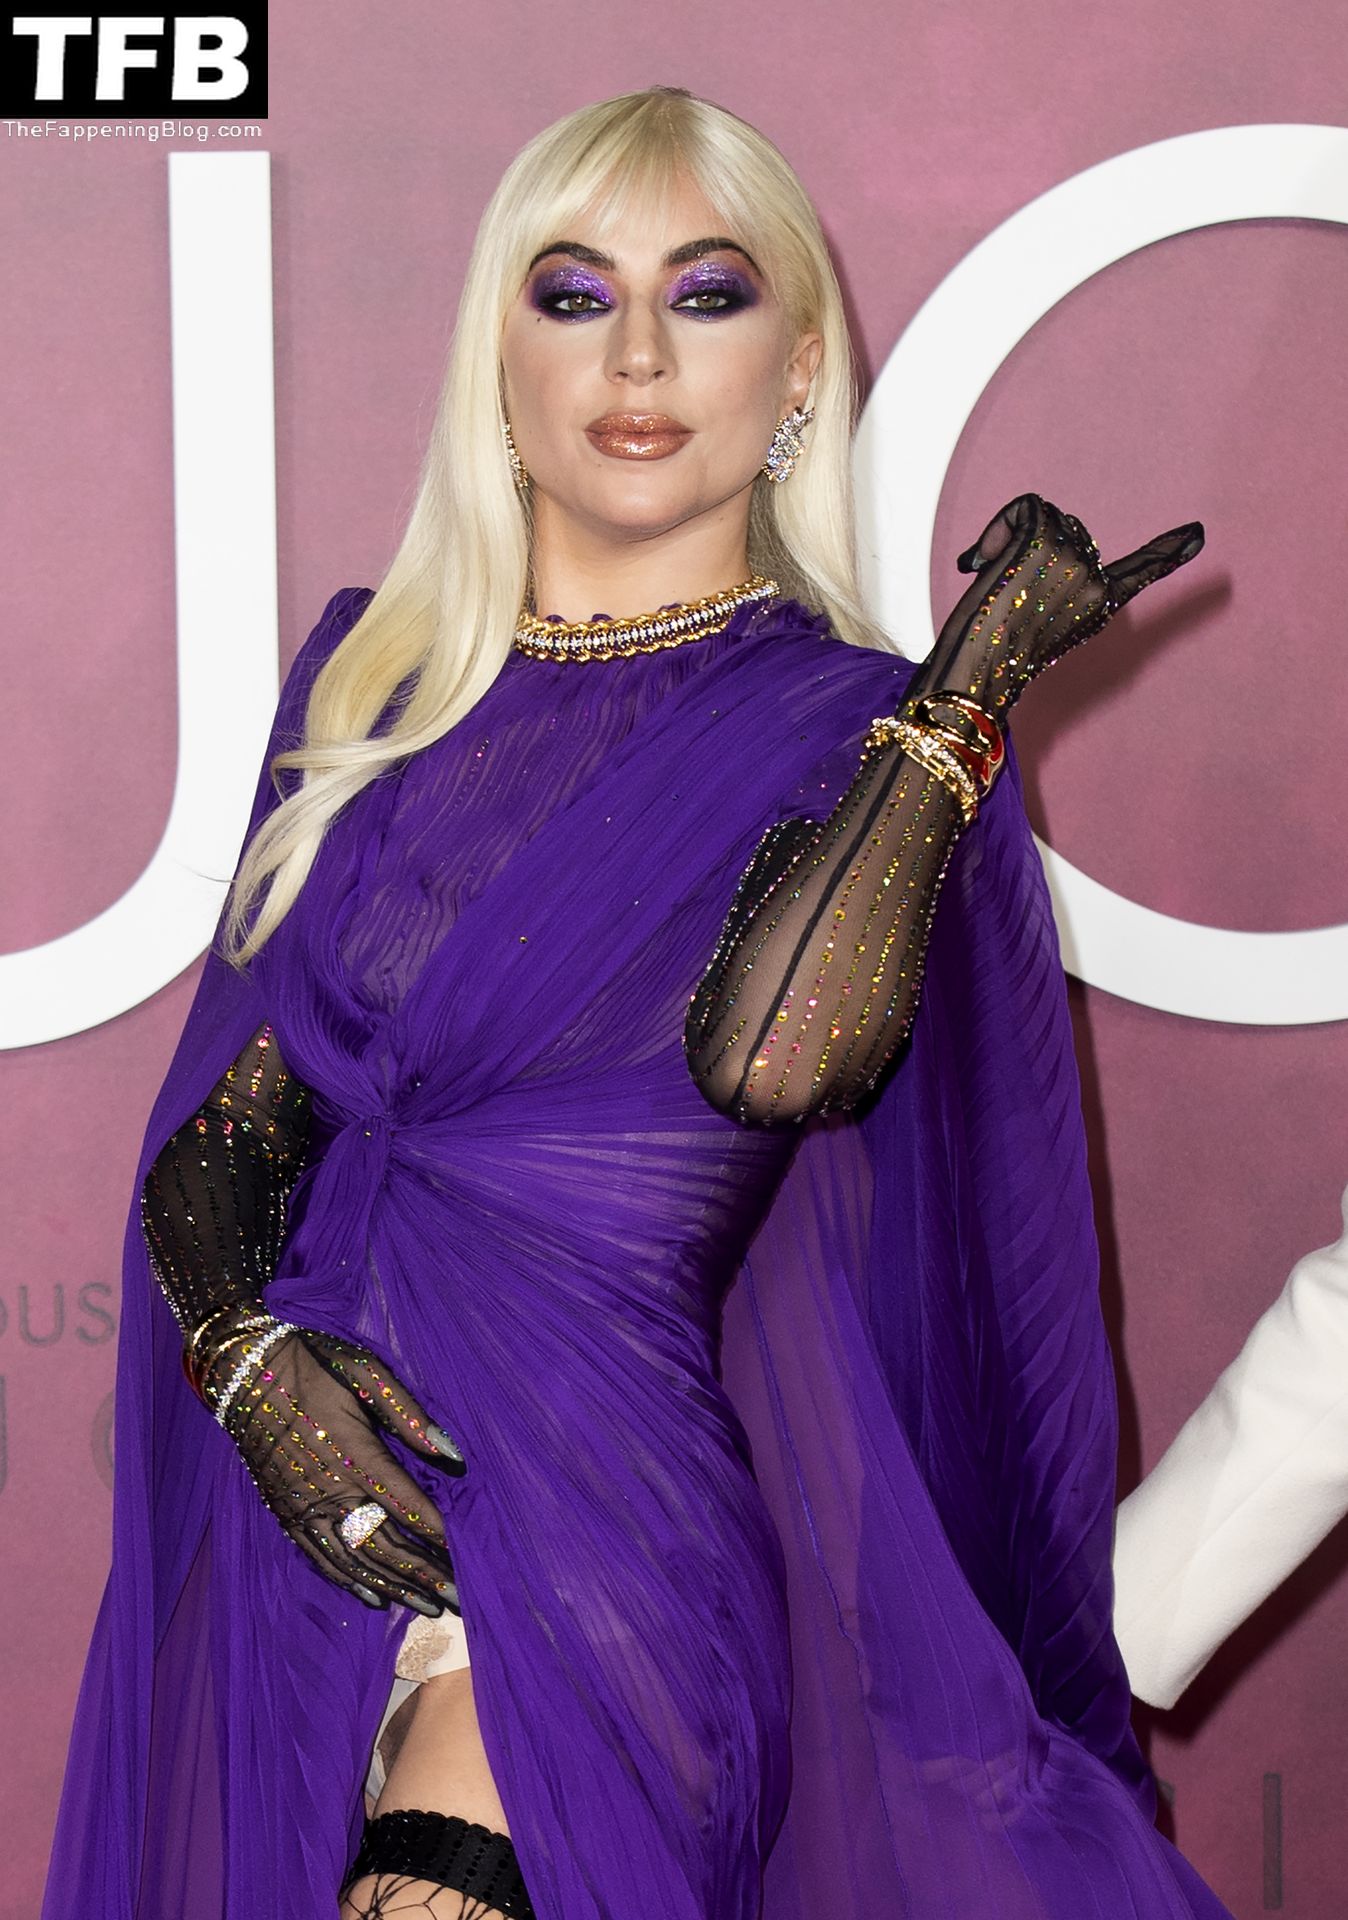 Lady-Gaga-Sexy-The-Fappening-Blog-134.jpg